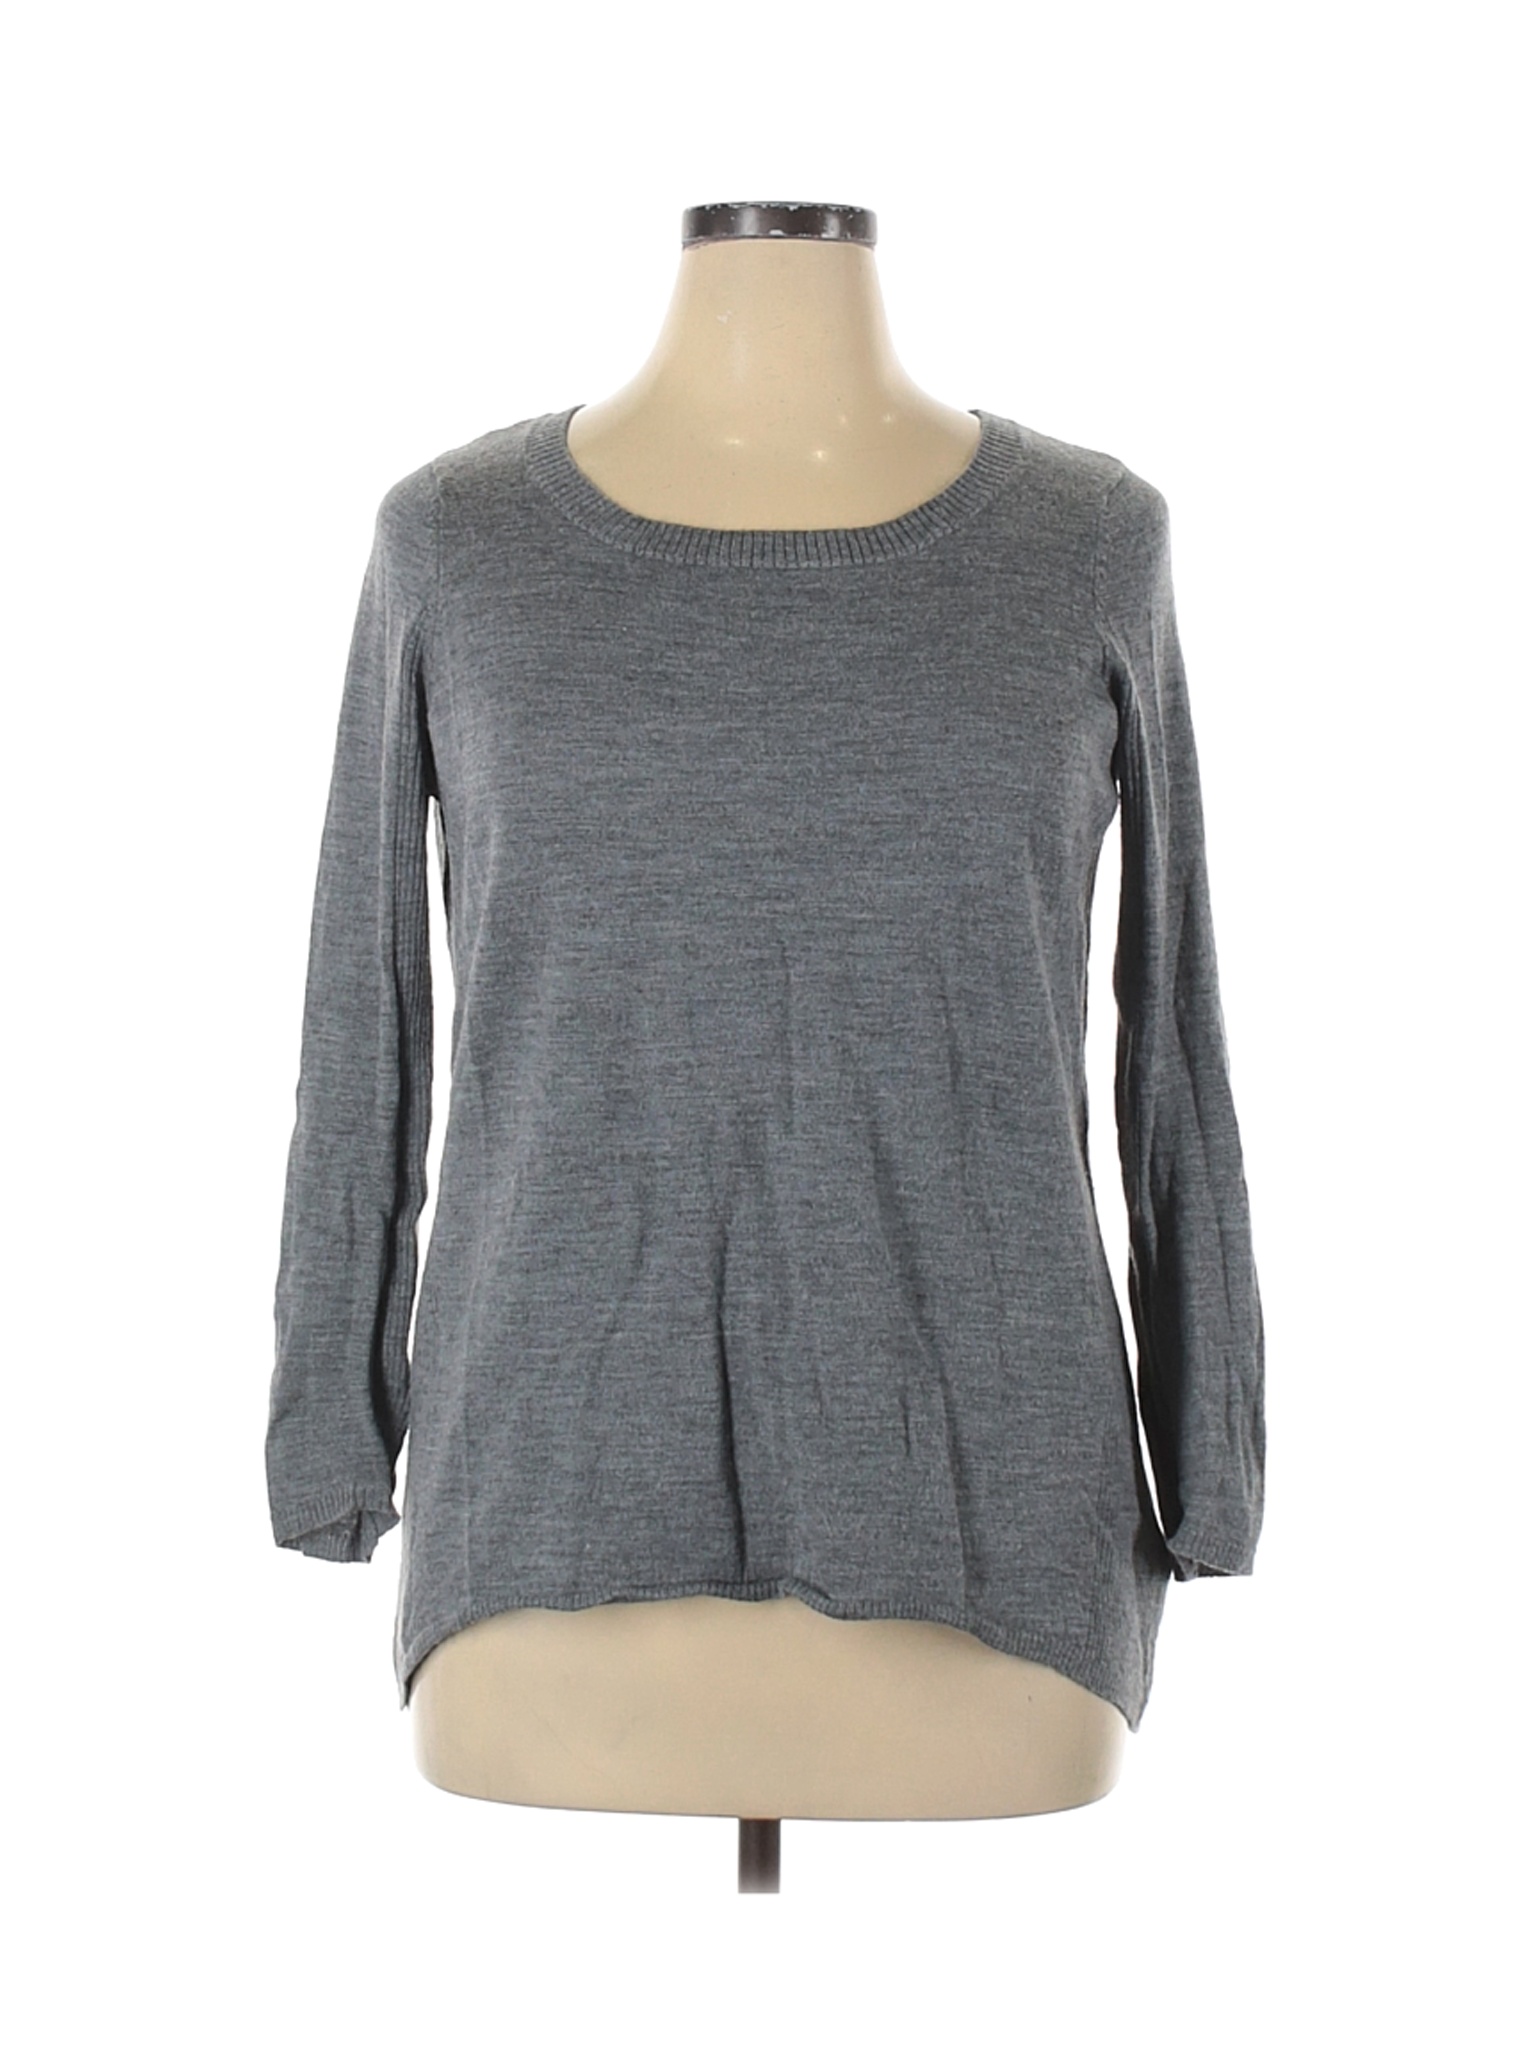 Max Studio Women Gray Wool Pullover Sweater 1X Plus | eBay